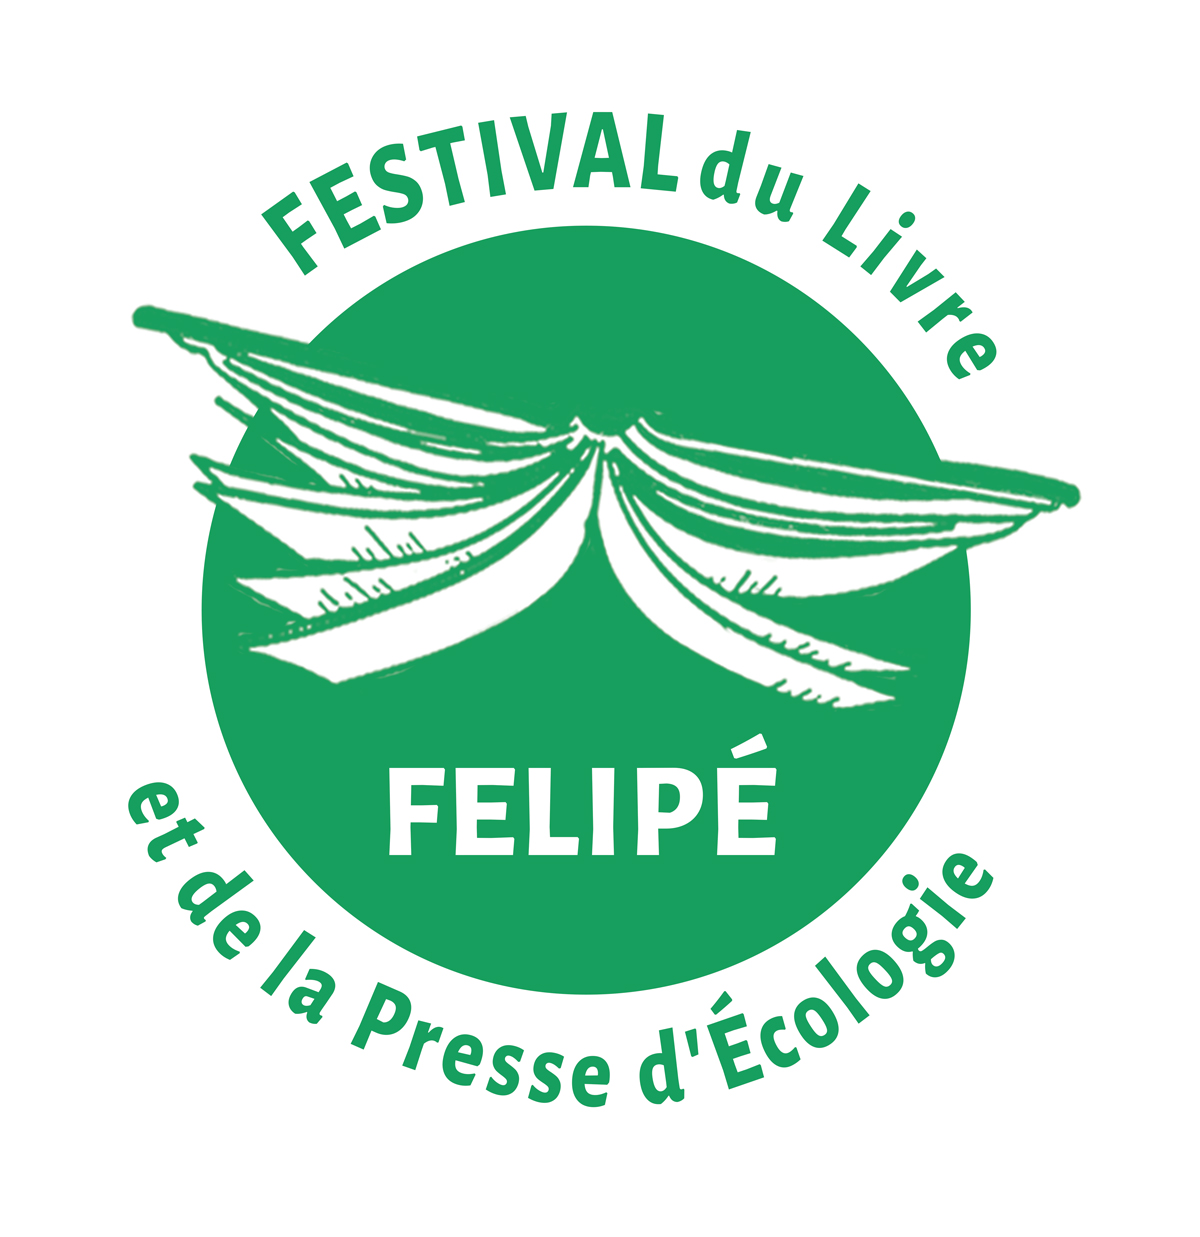 (c) Festival-livre-presse-ecologie.org